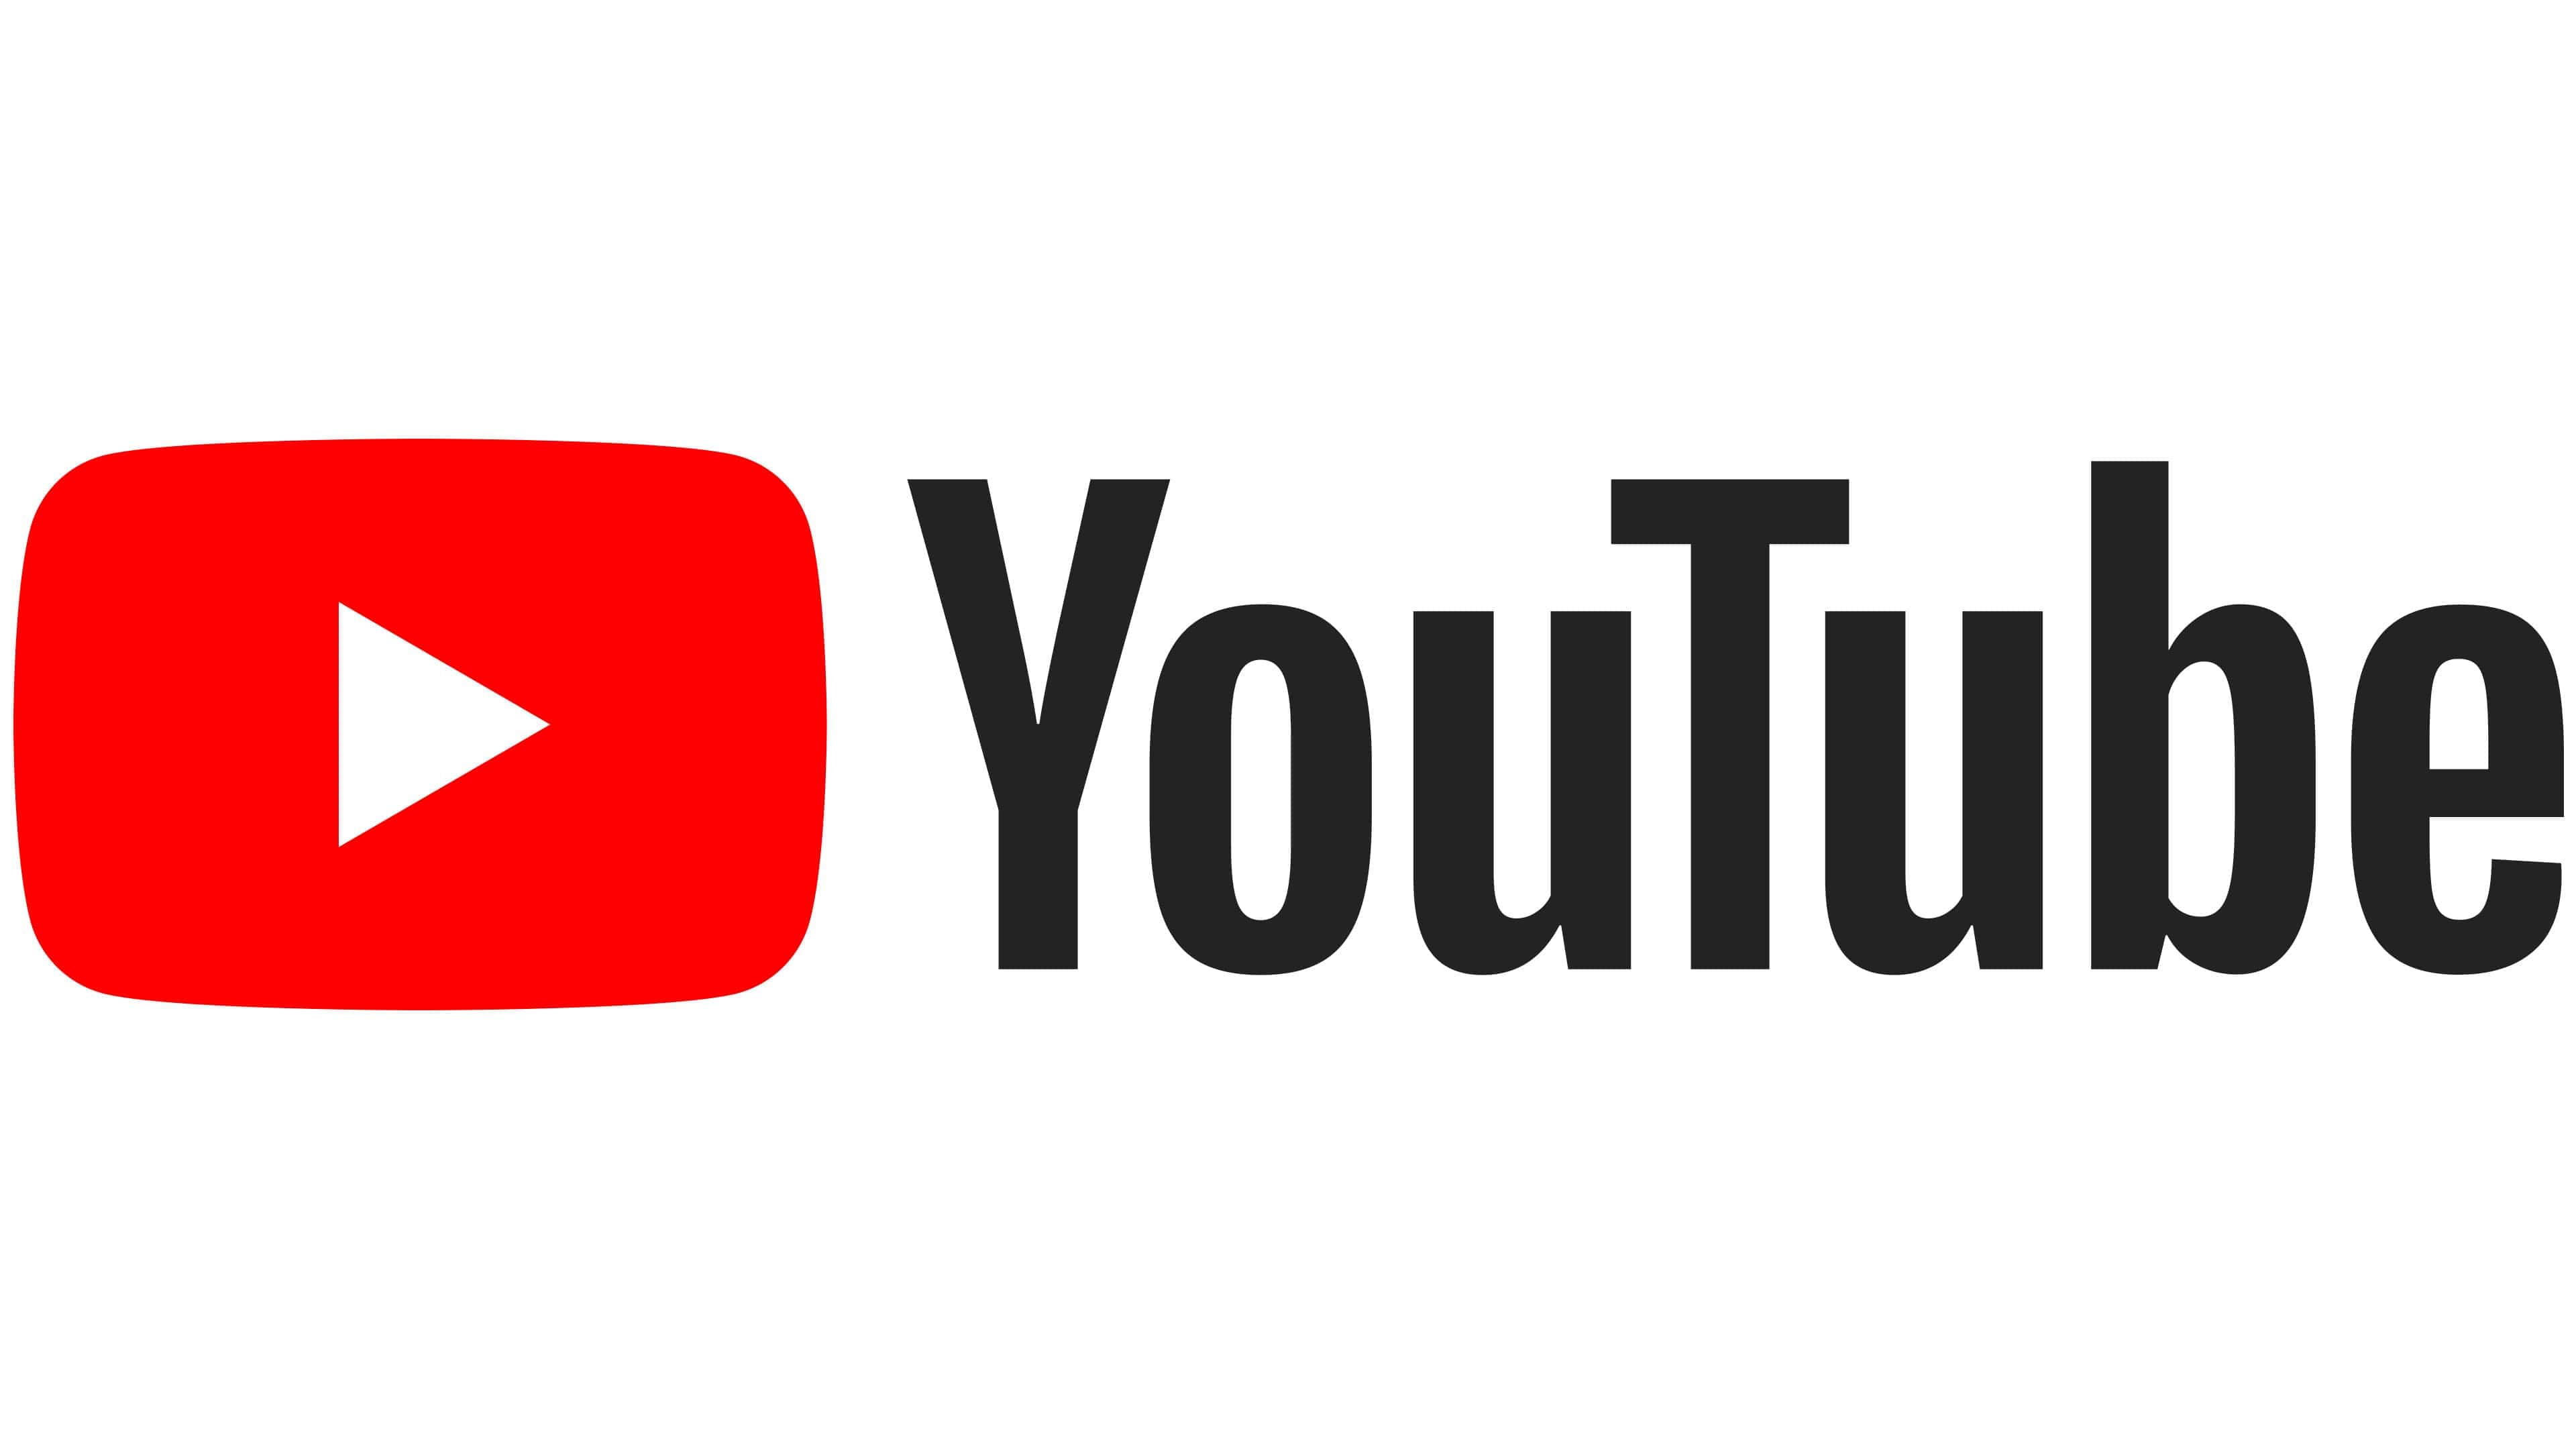 youtube_logo_2017_present_2.jpg